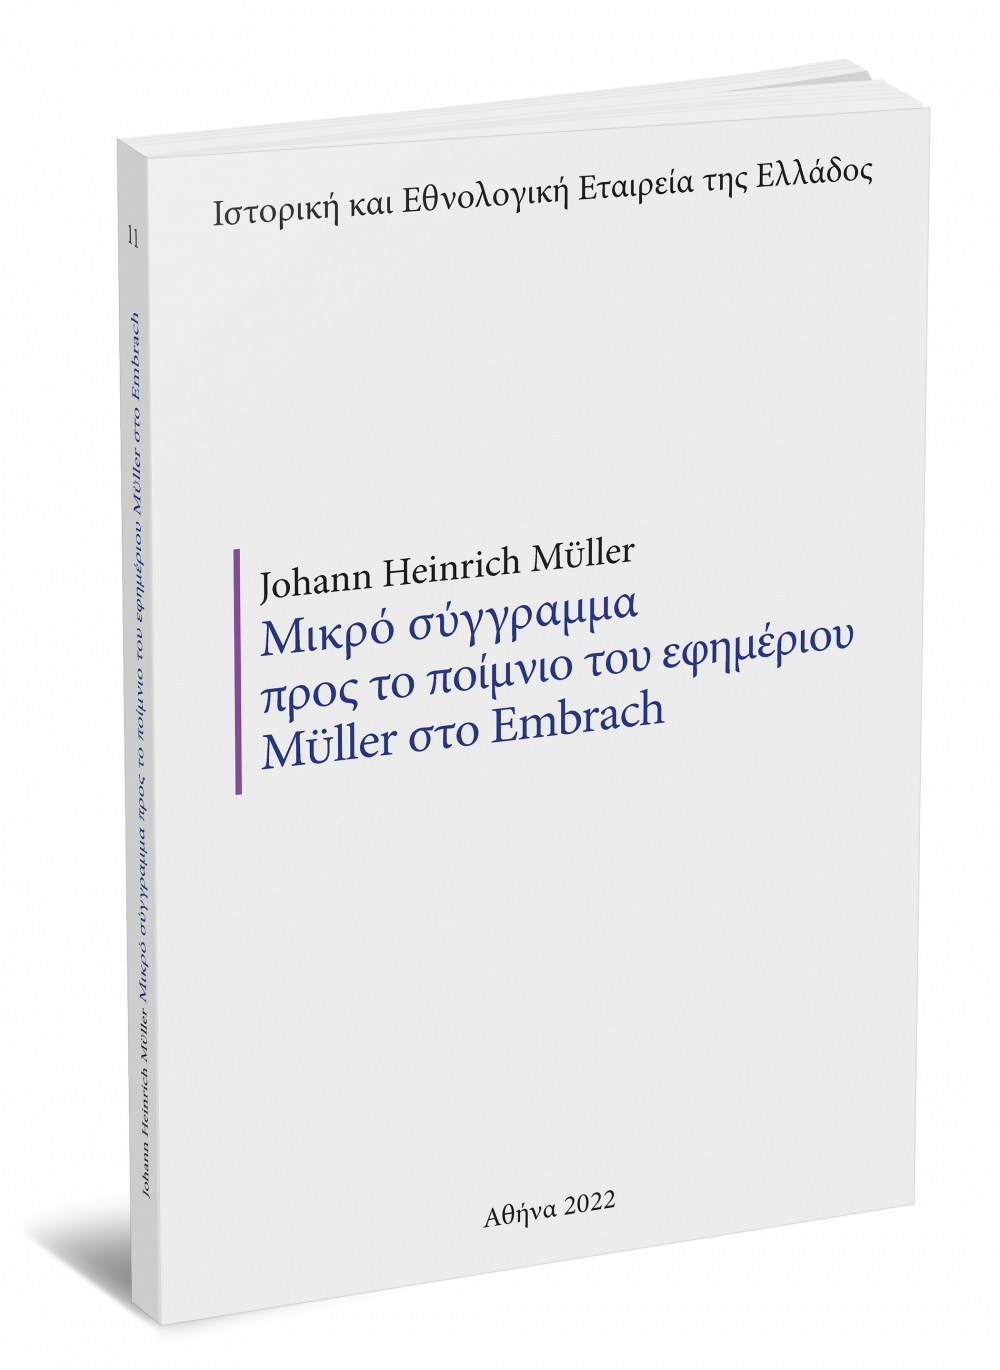 Johann Heinrich Müller, Μικρό σύγγραμμα προς το ποίμνιο του εφημέριου Müller στο Embrach